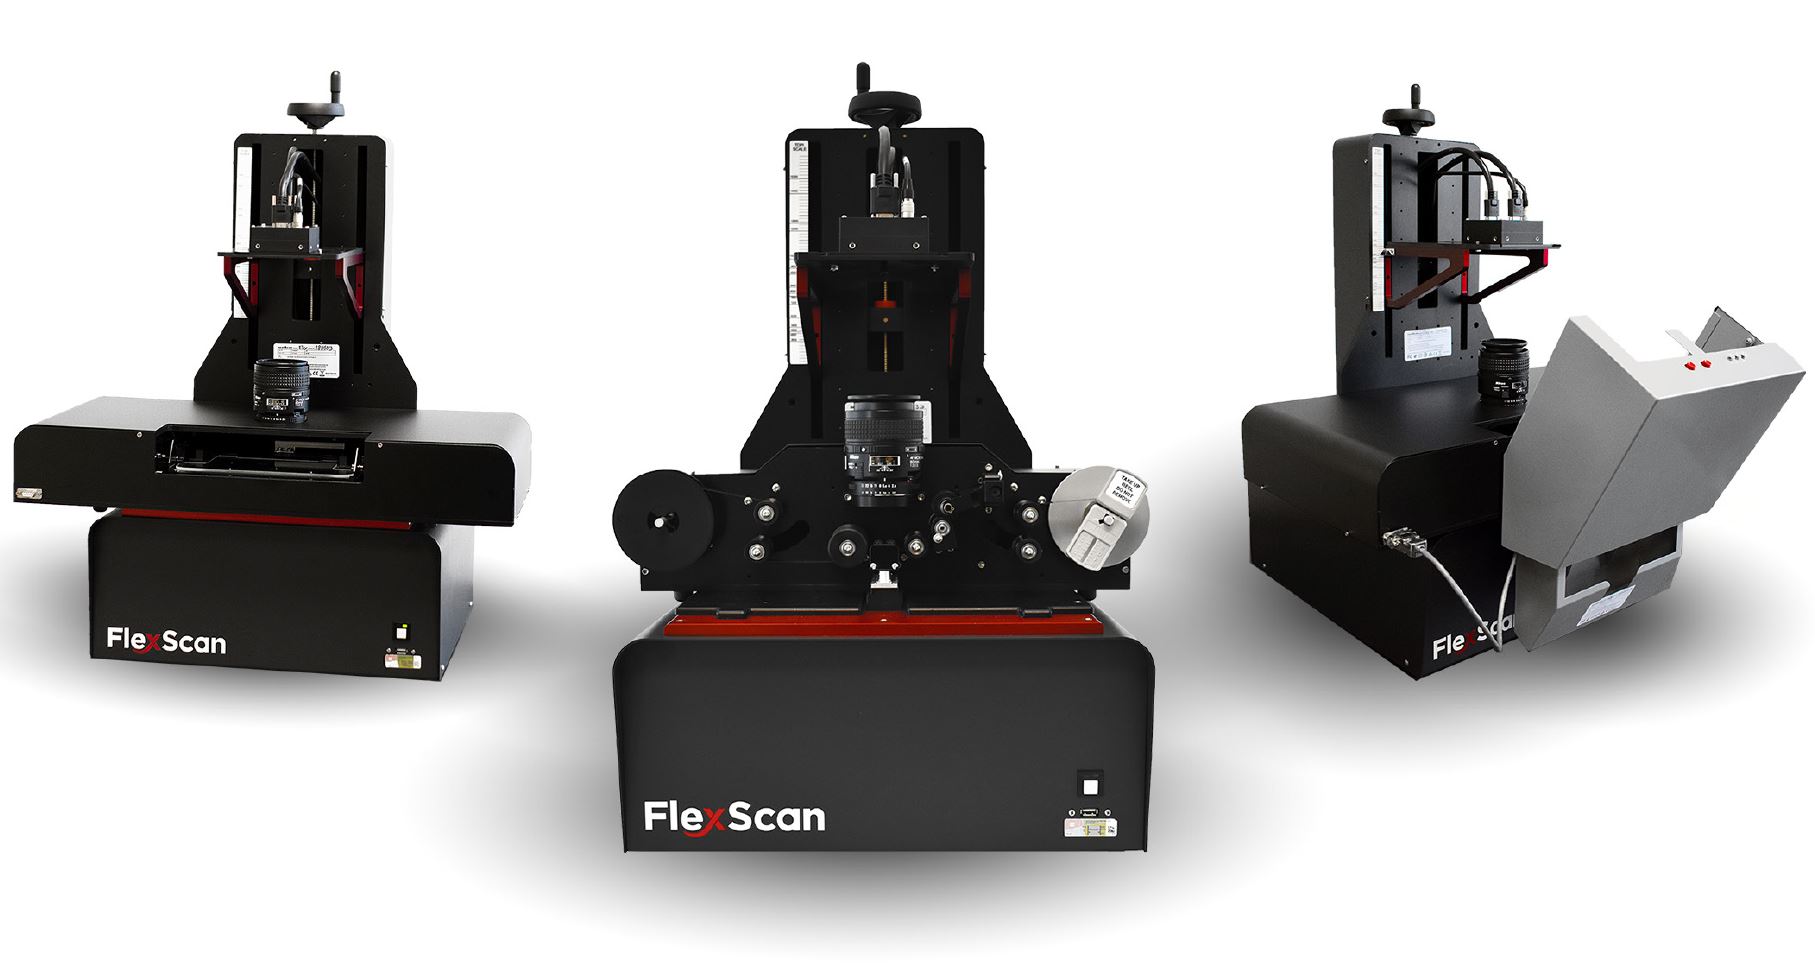 Mikrofilmscanner - FlexScan